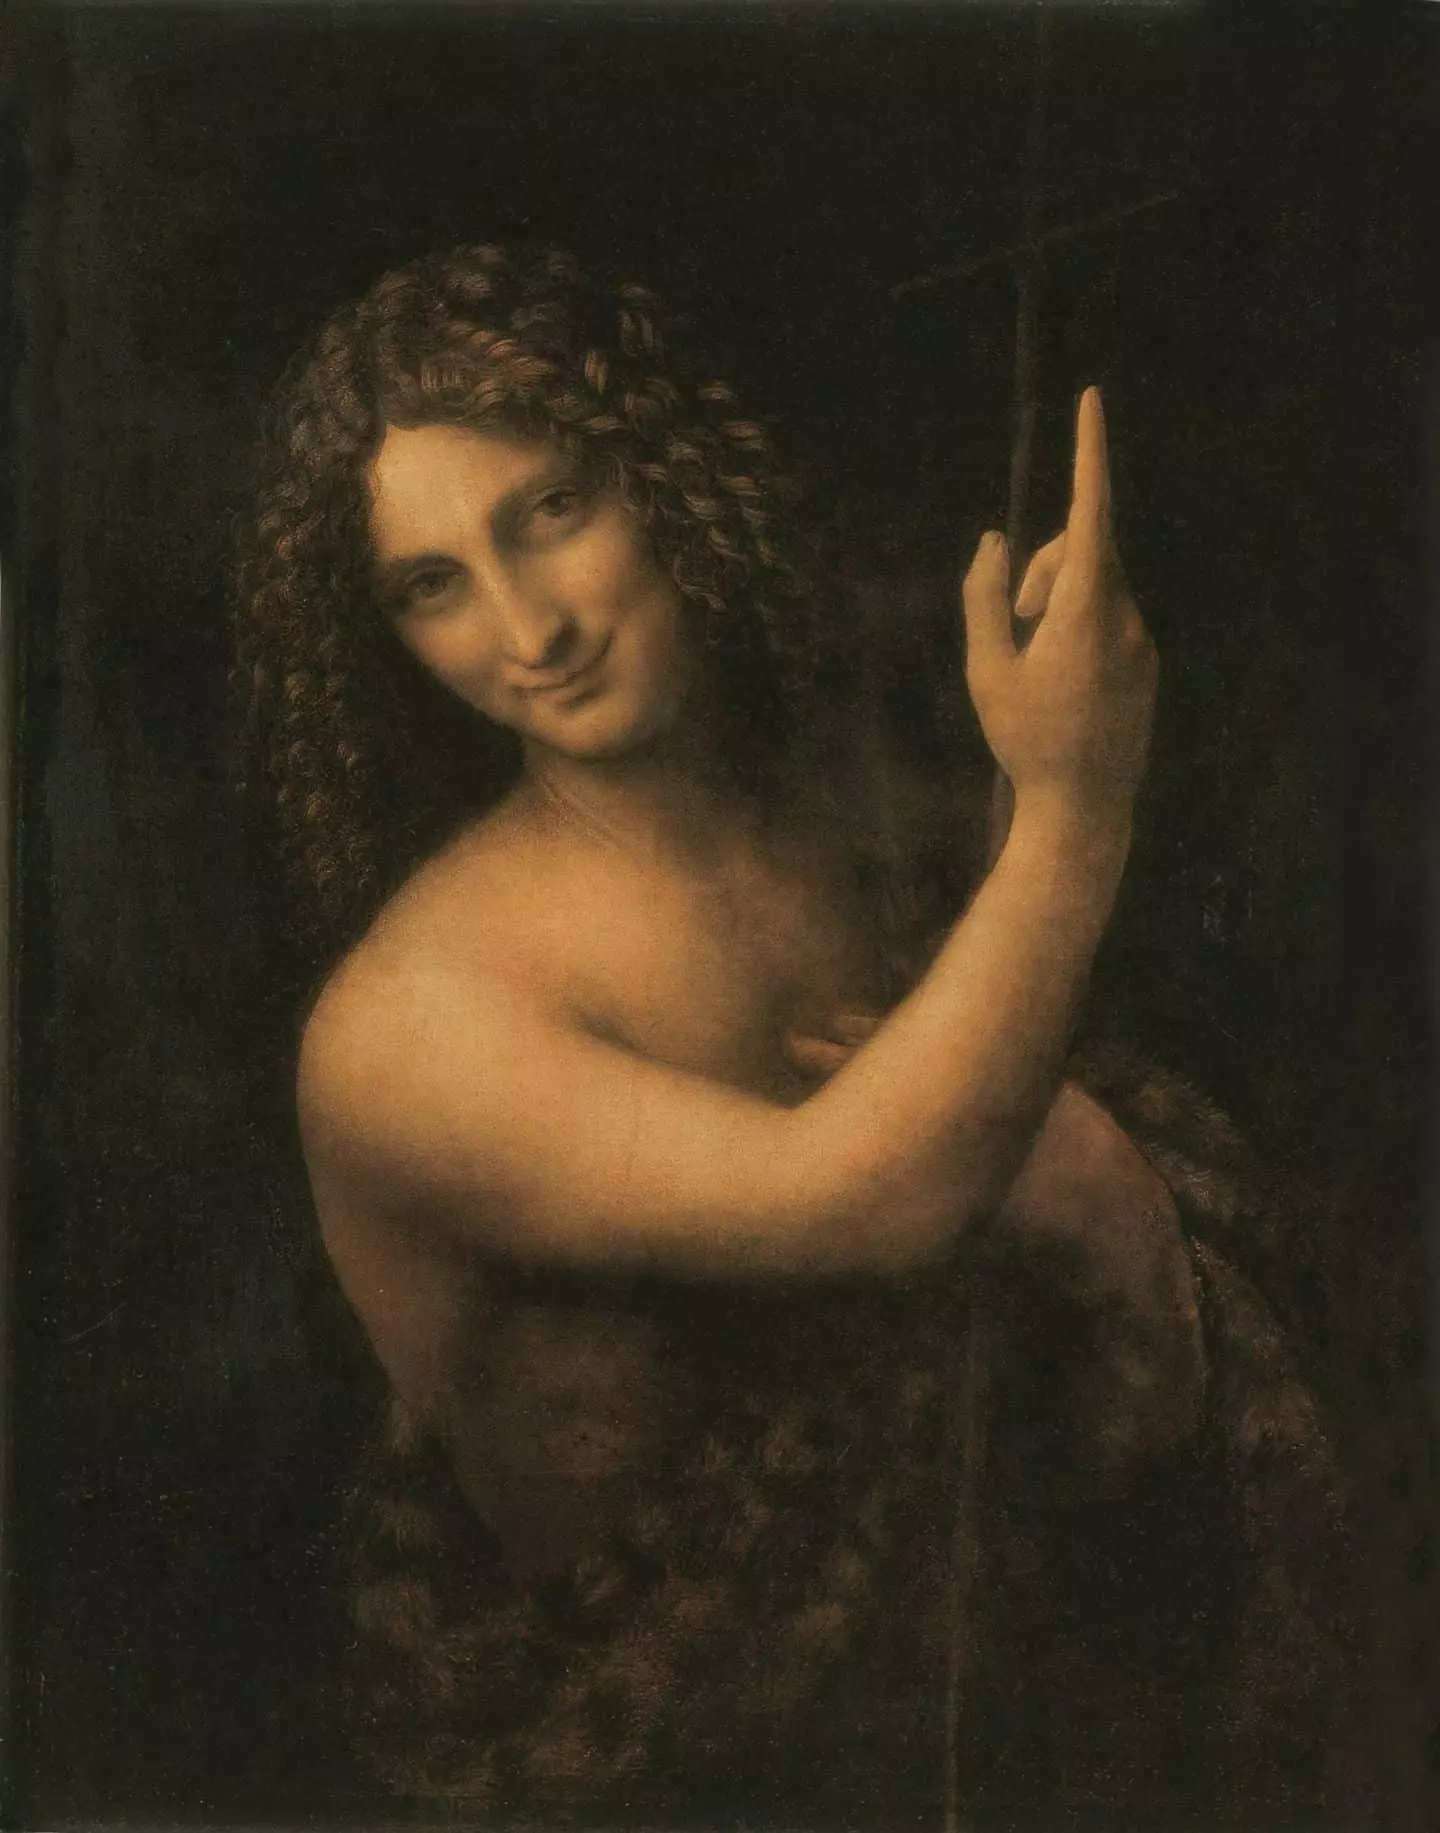 UJohn Angeptimist umfanekiso uLeonardo da Vinci